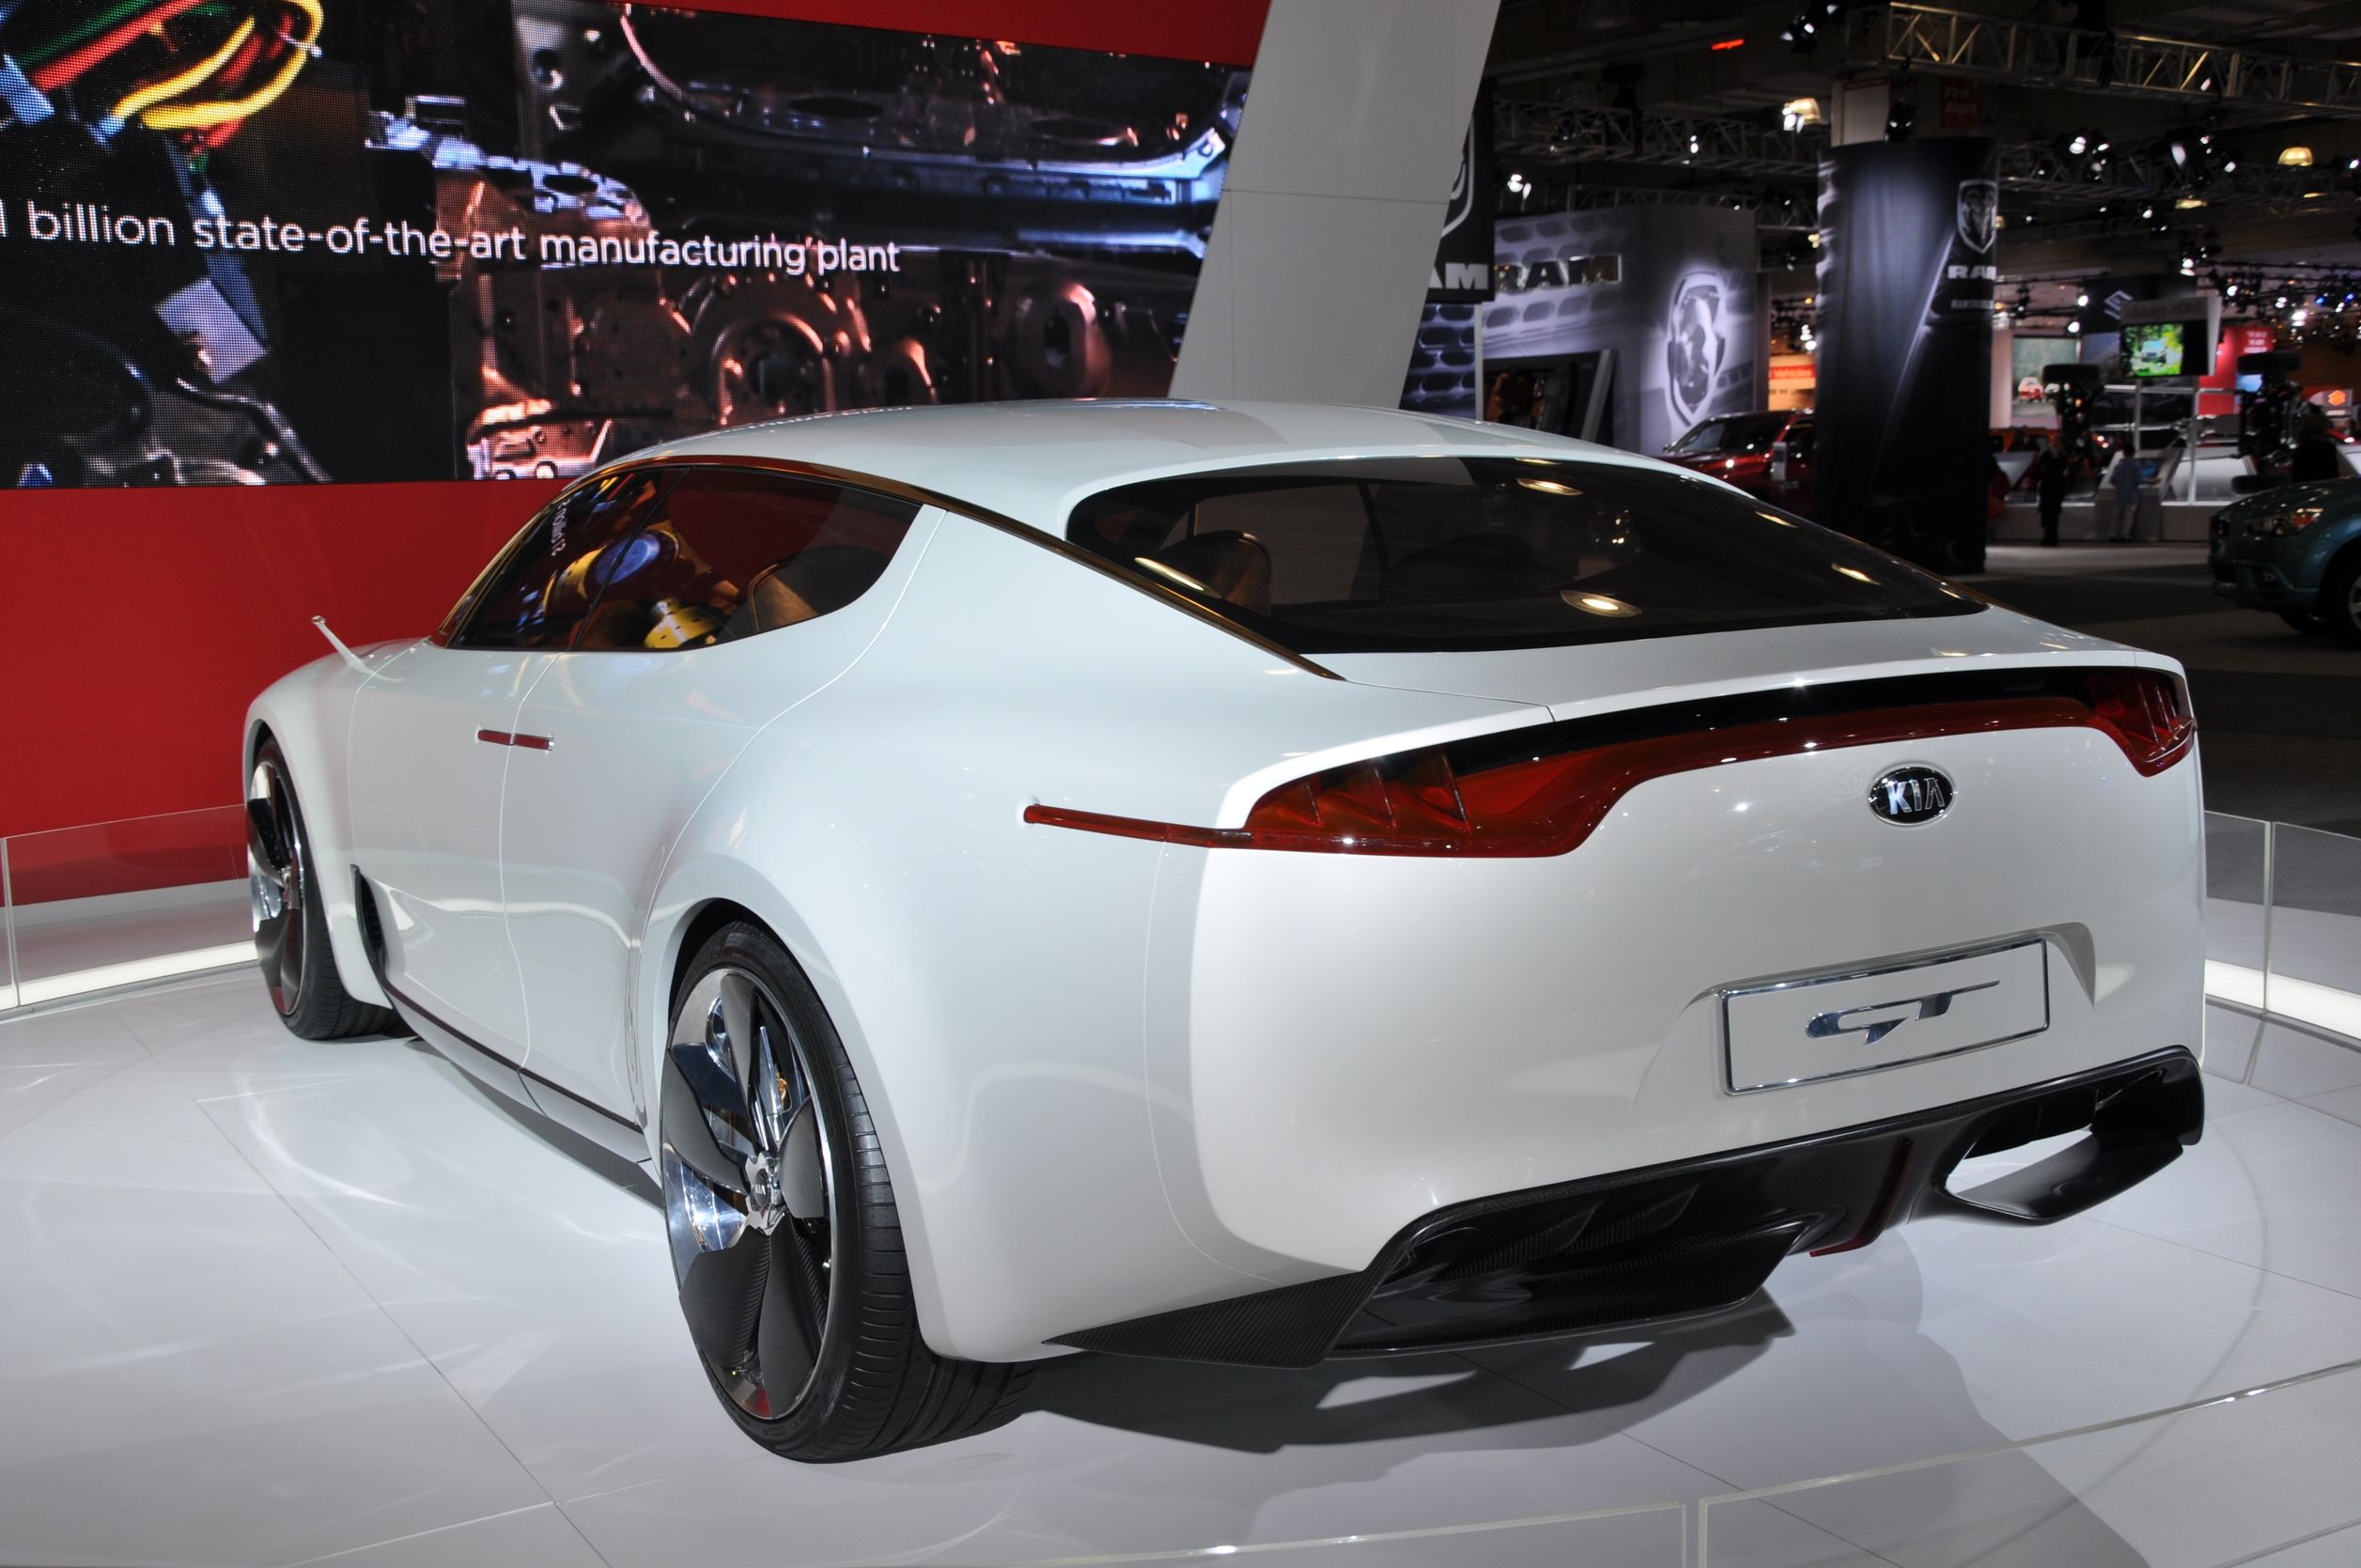 Kia GT Concept Car at the 2012 New York International Auto Show